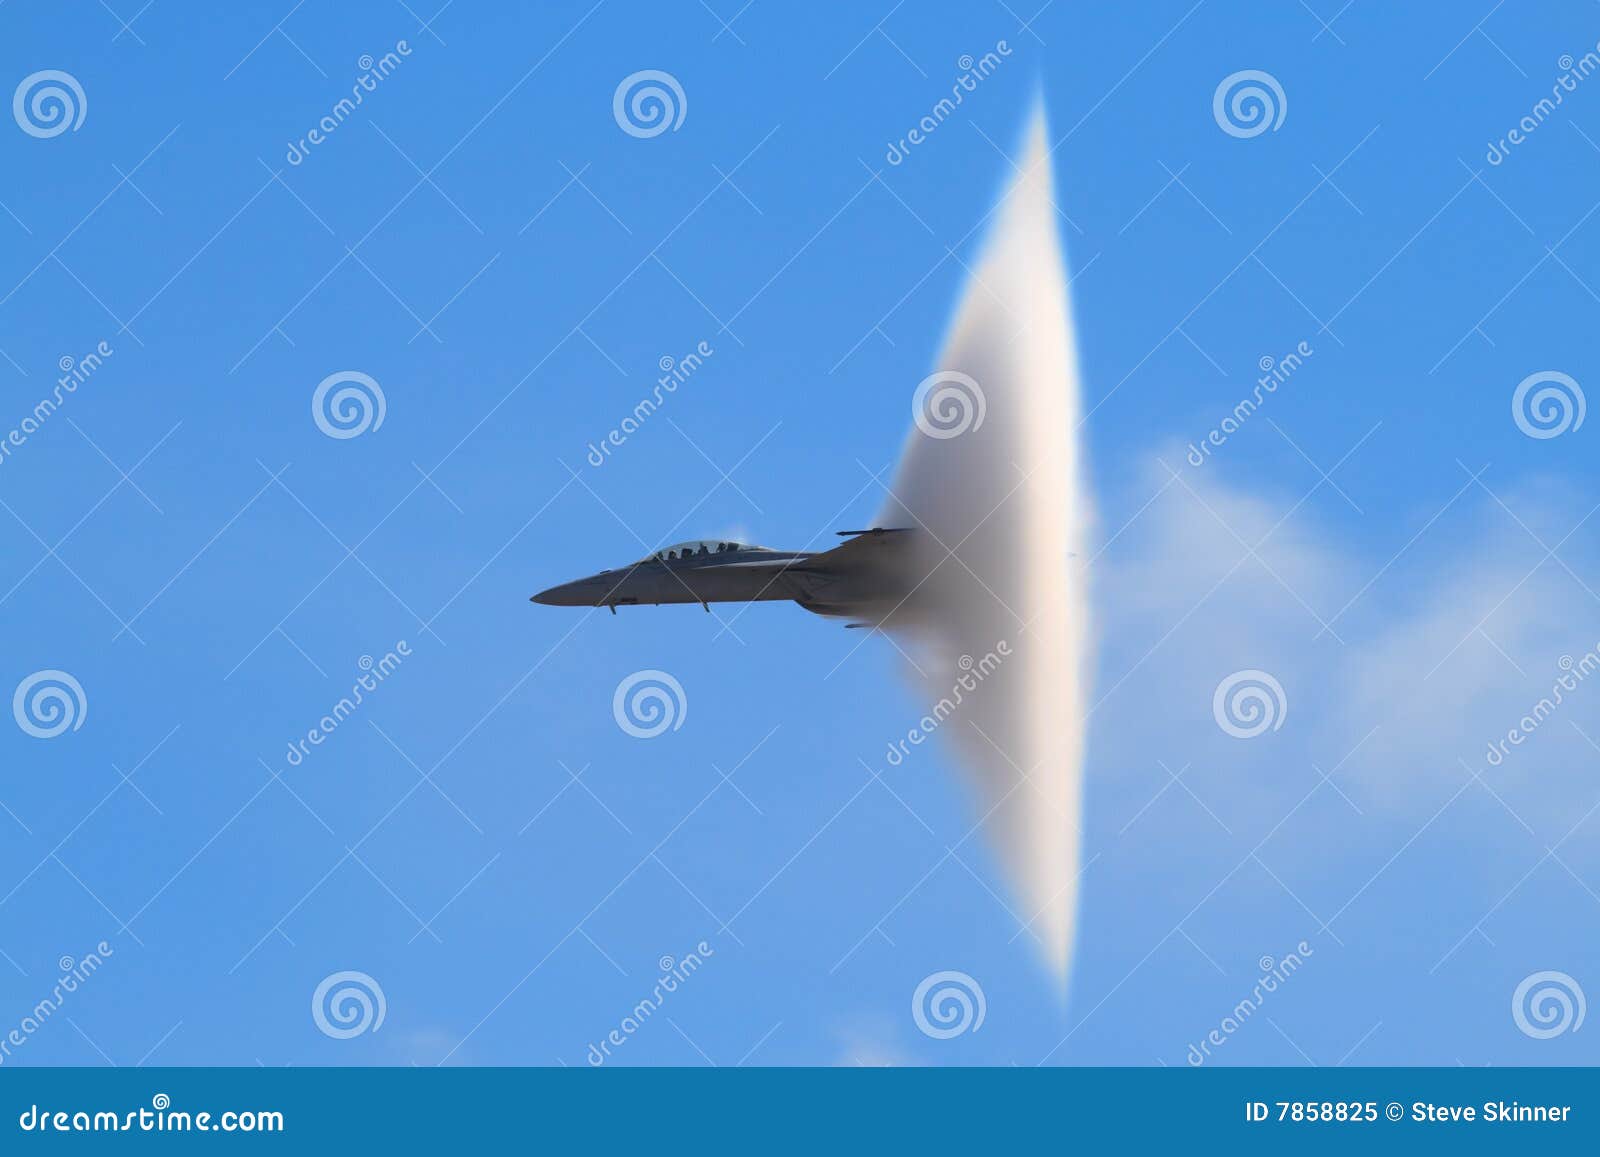 supersonic vapor cone (f-18 super hornet)